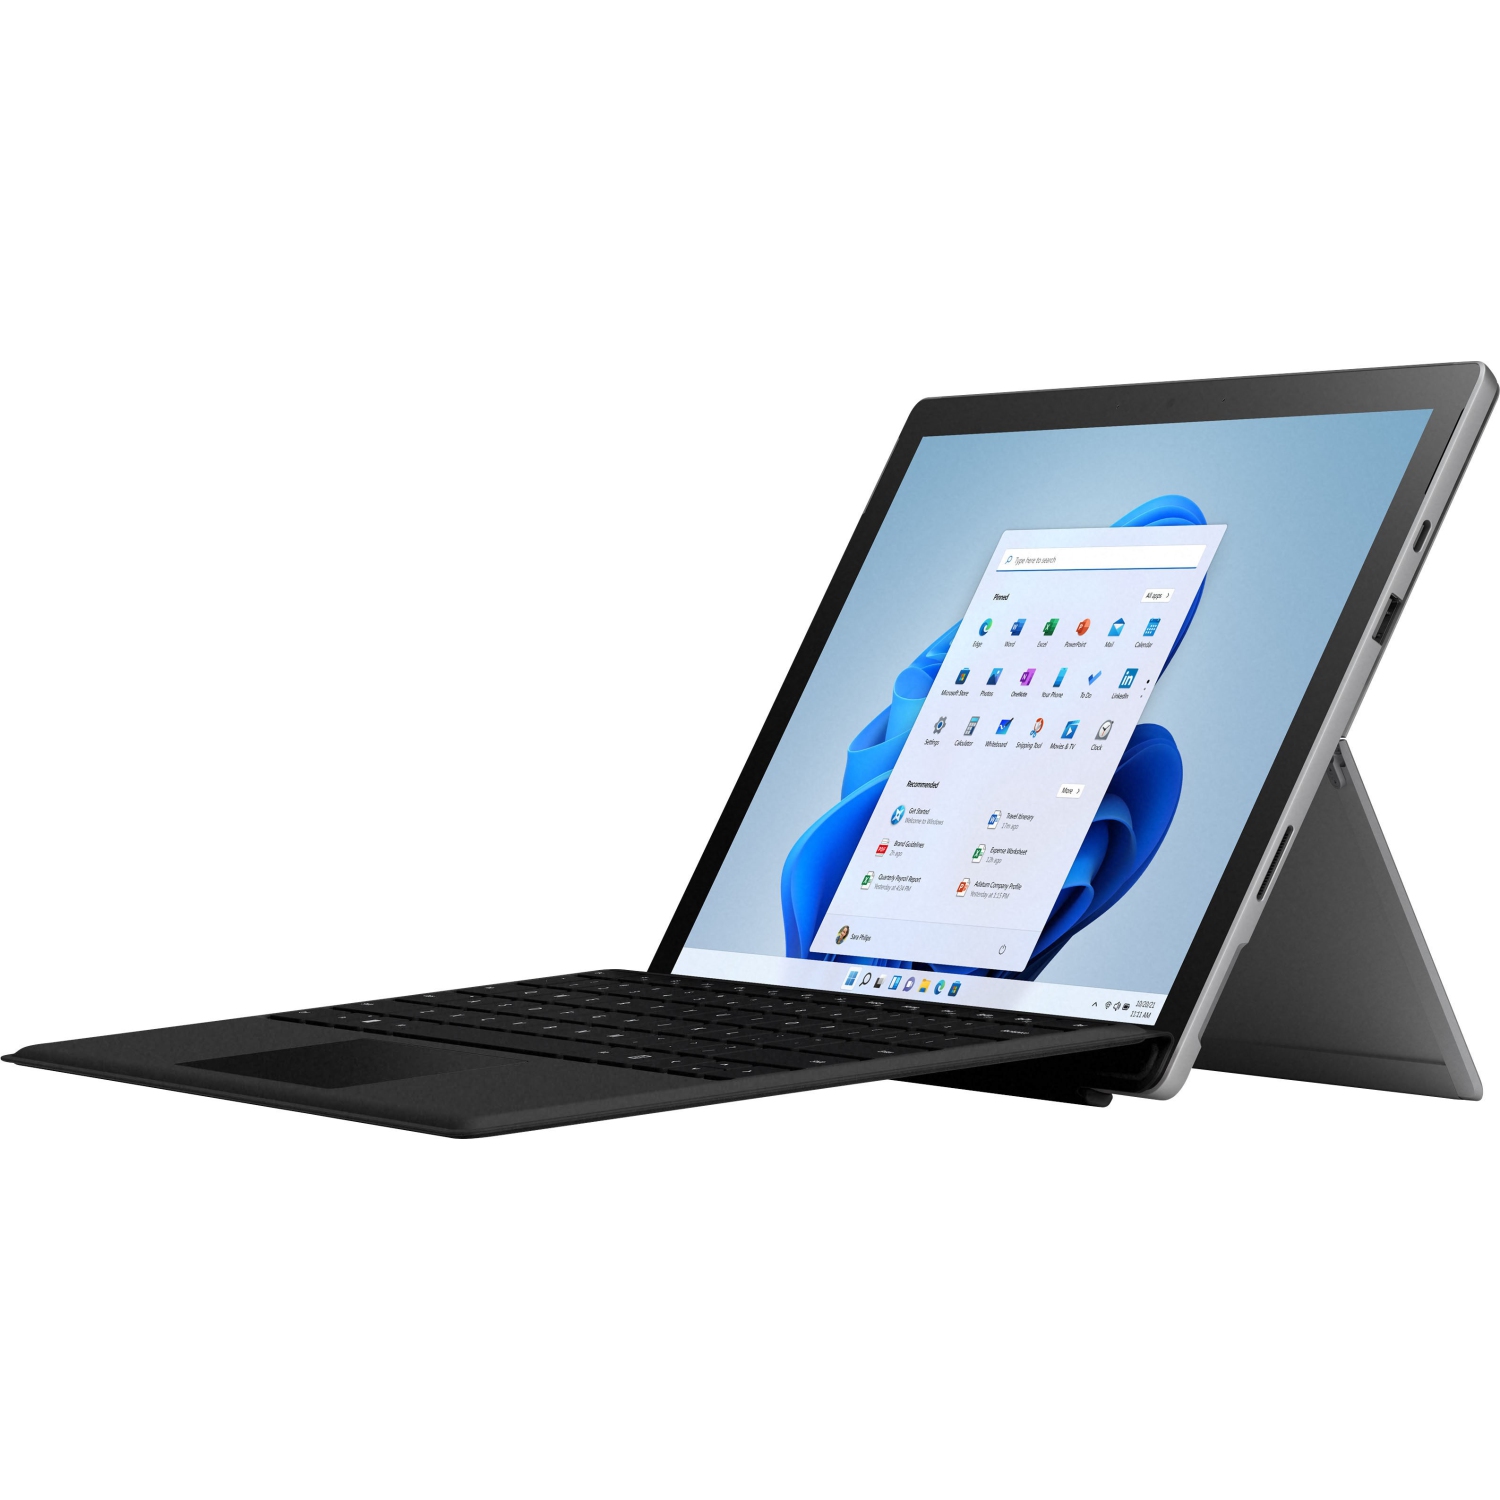 Refurbished (Excellent) - Microsoft Surface Pro 7+ 12.3" 256GB Windows 10 Tablet With Intel Core i5-1135G7 Quad-Core Processor - Platinum